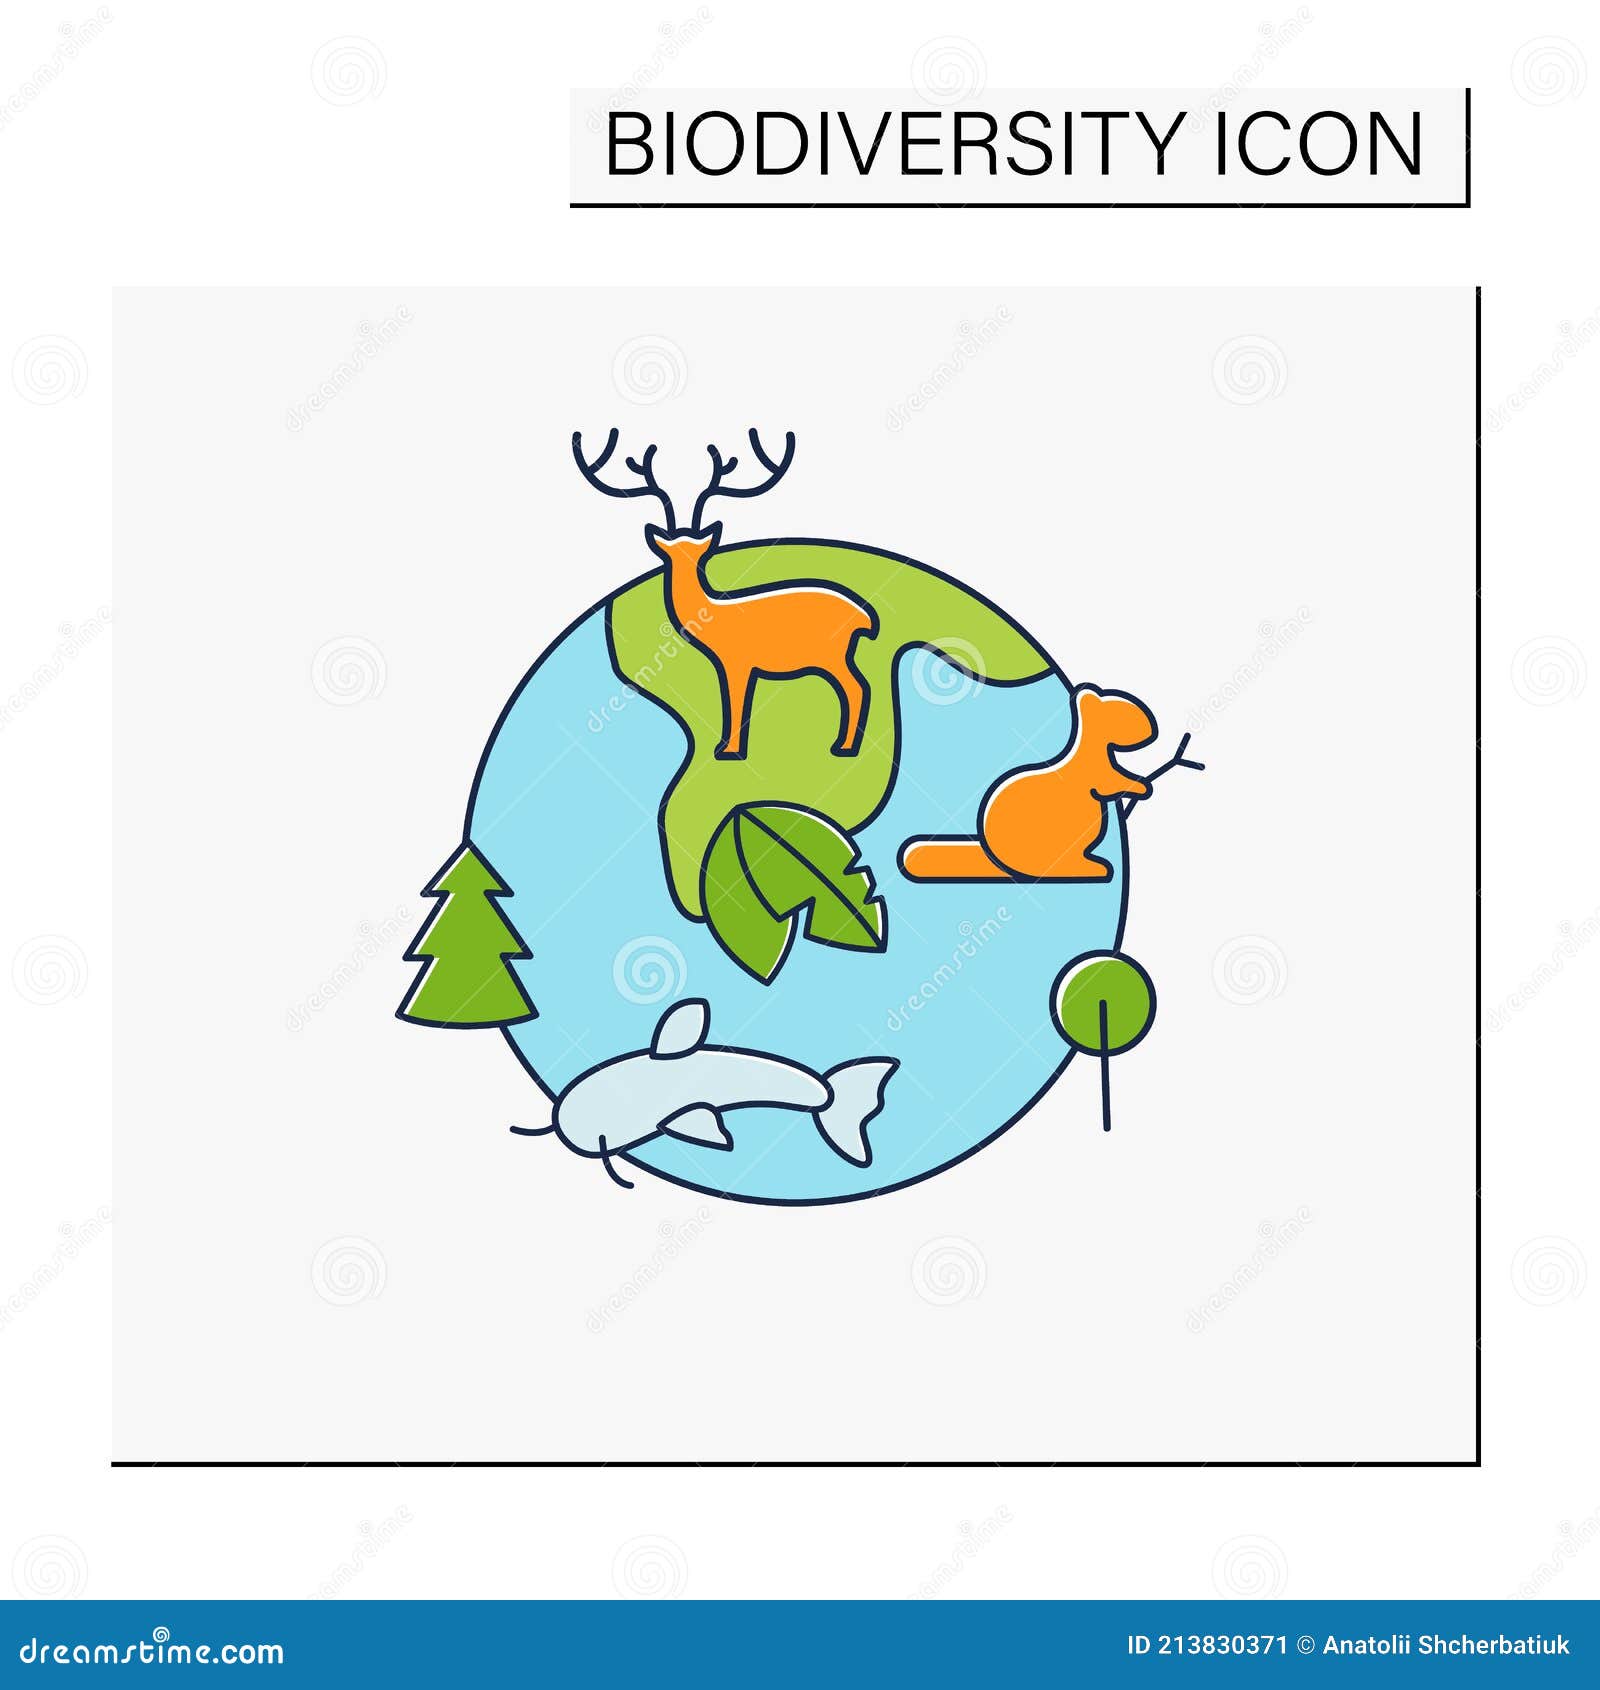 biodiversity color icon